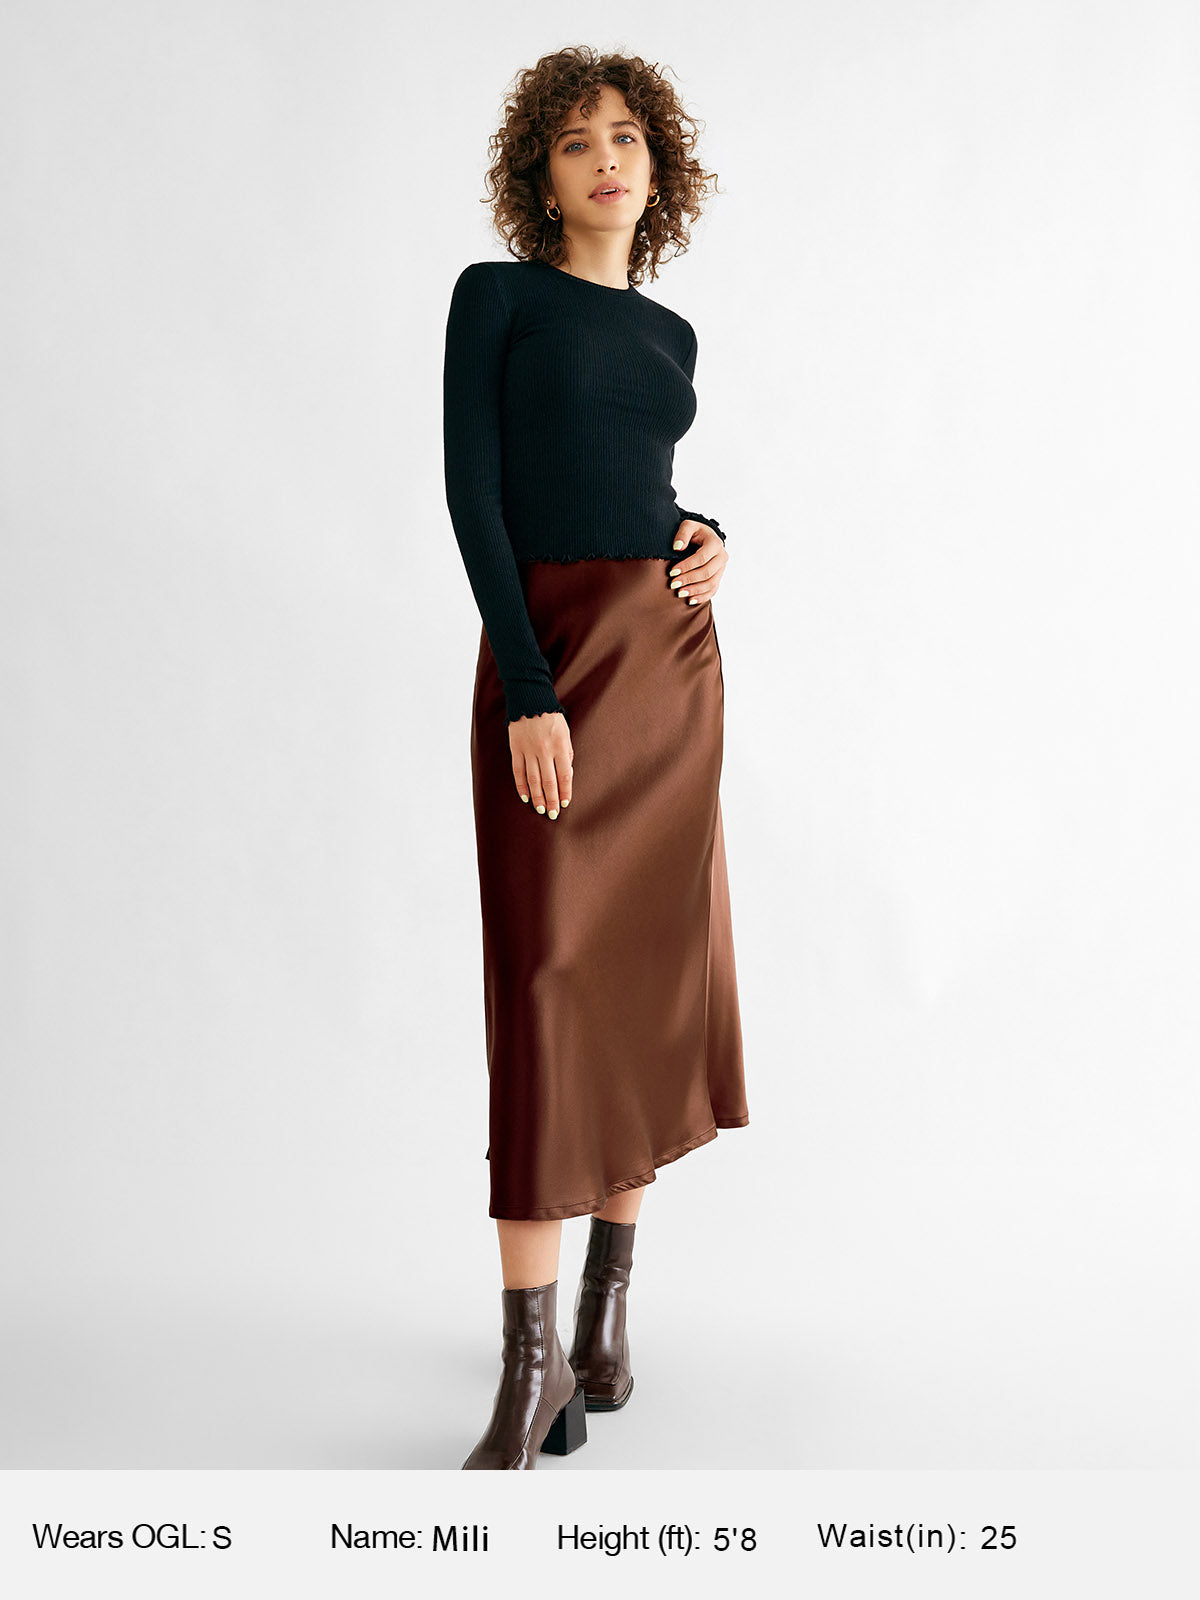 Silk-Like Satin Midi Slip Skirt Bias-Cut High Waisted Womens Skirt ...